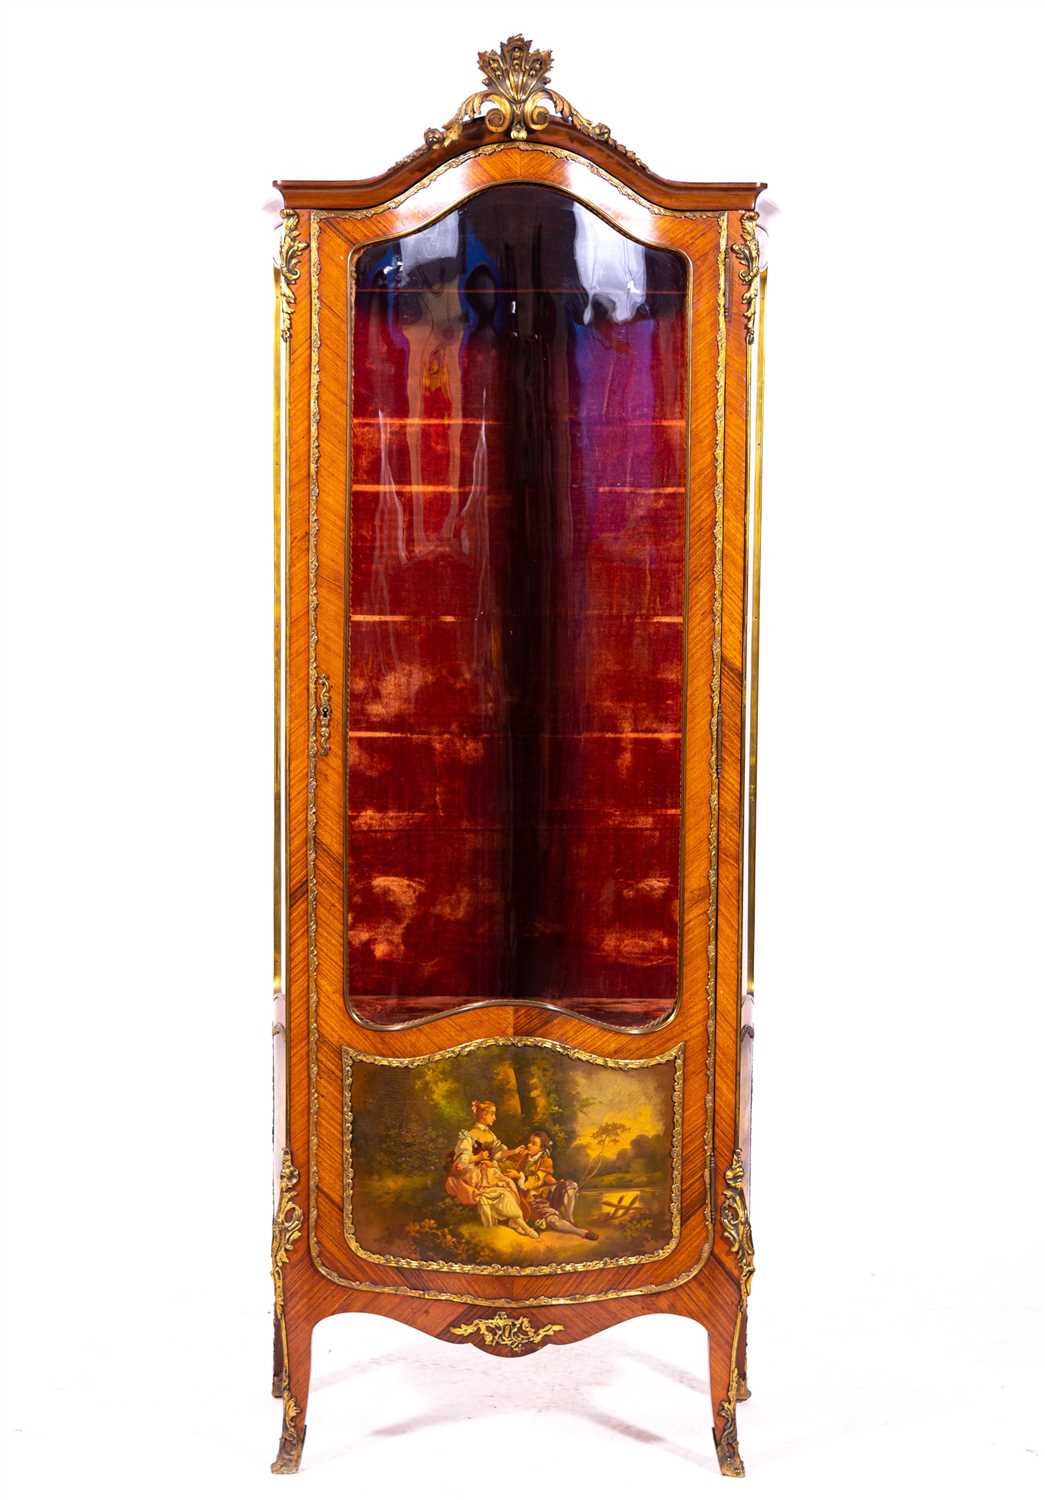 Lot 473 - A Louis XV style kingwood and gilt metal mounted vitrine, circa 1900